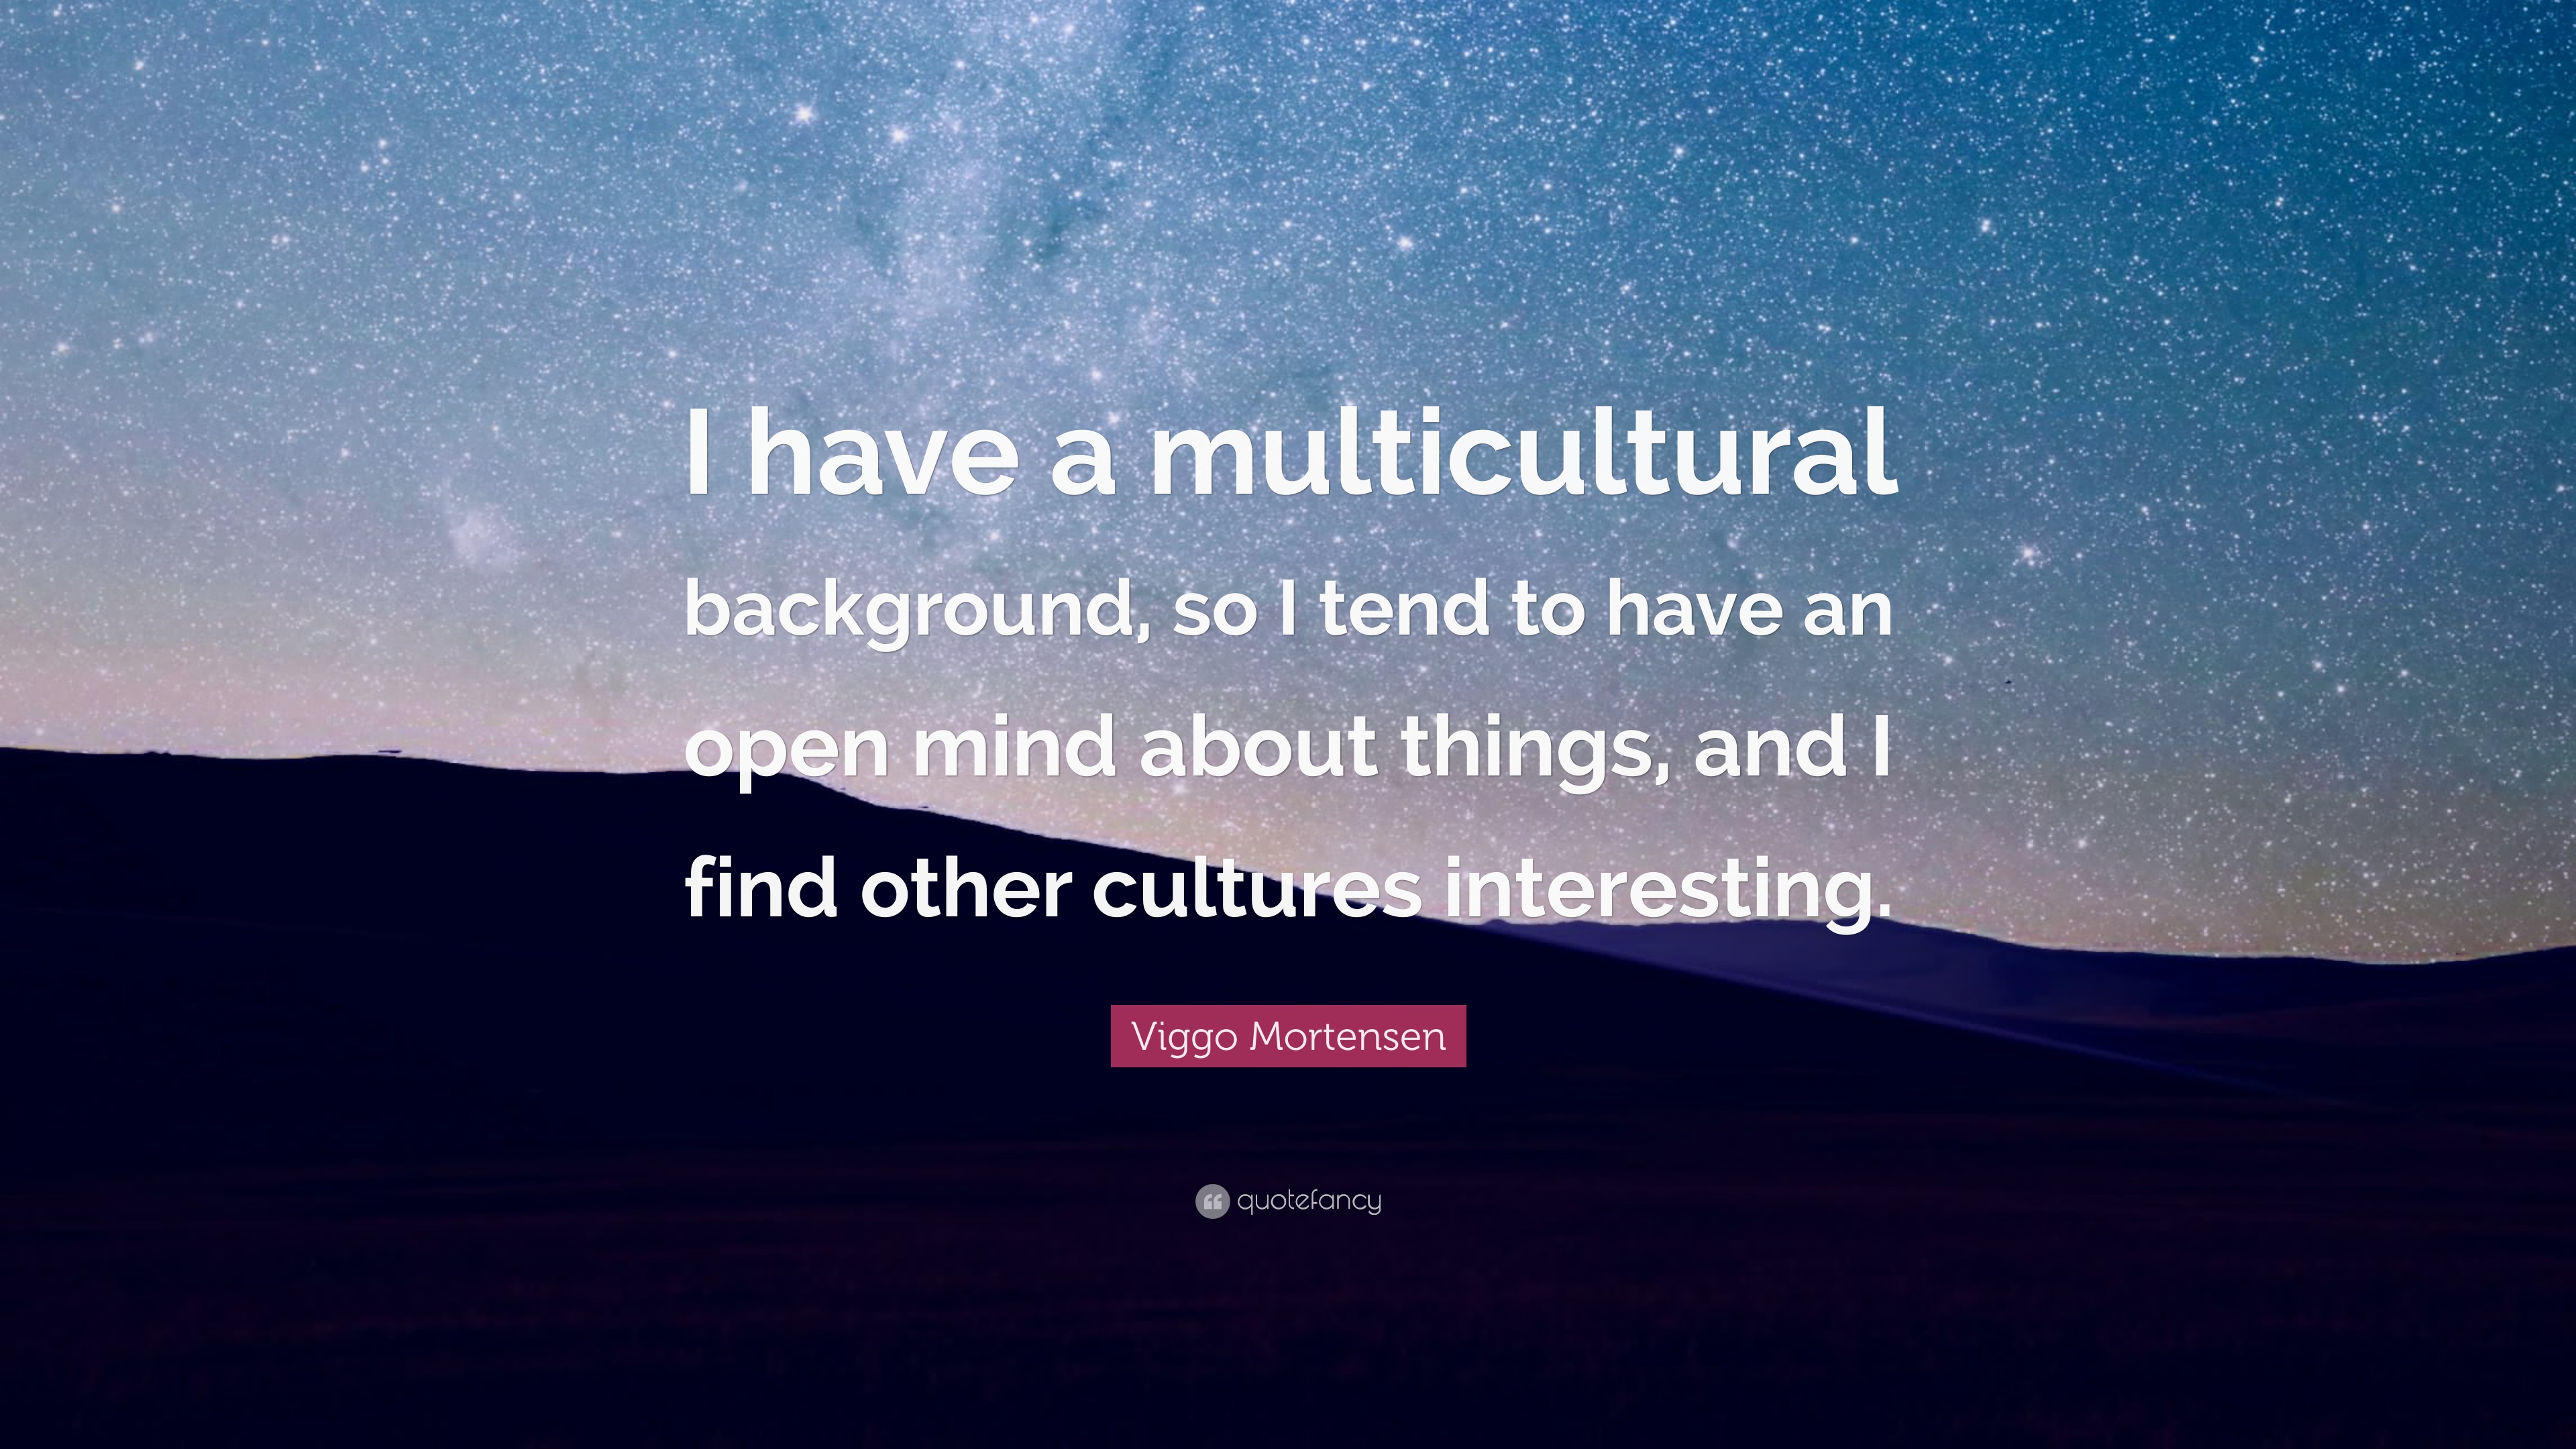 Viggo Mortensen Quote: “I have a multicultural background